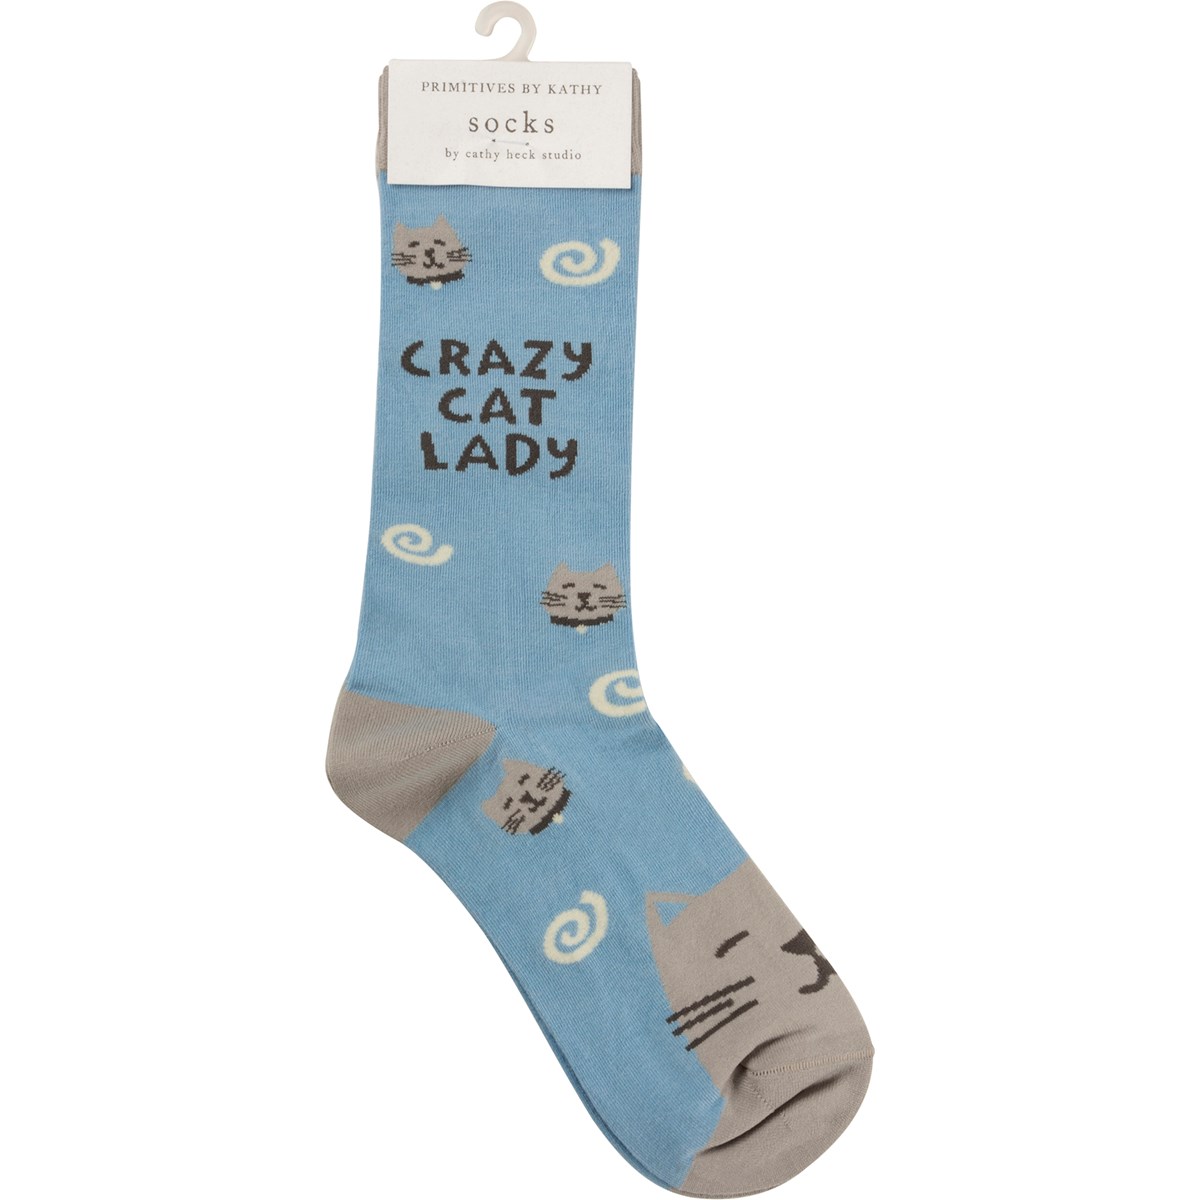 Cat Lady Socks - Cotton, Nylon, Spandex